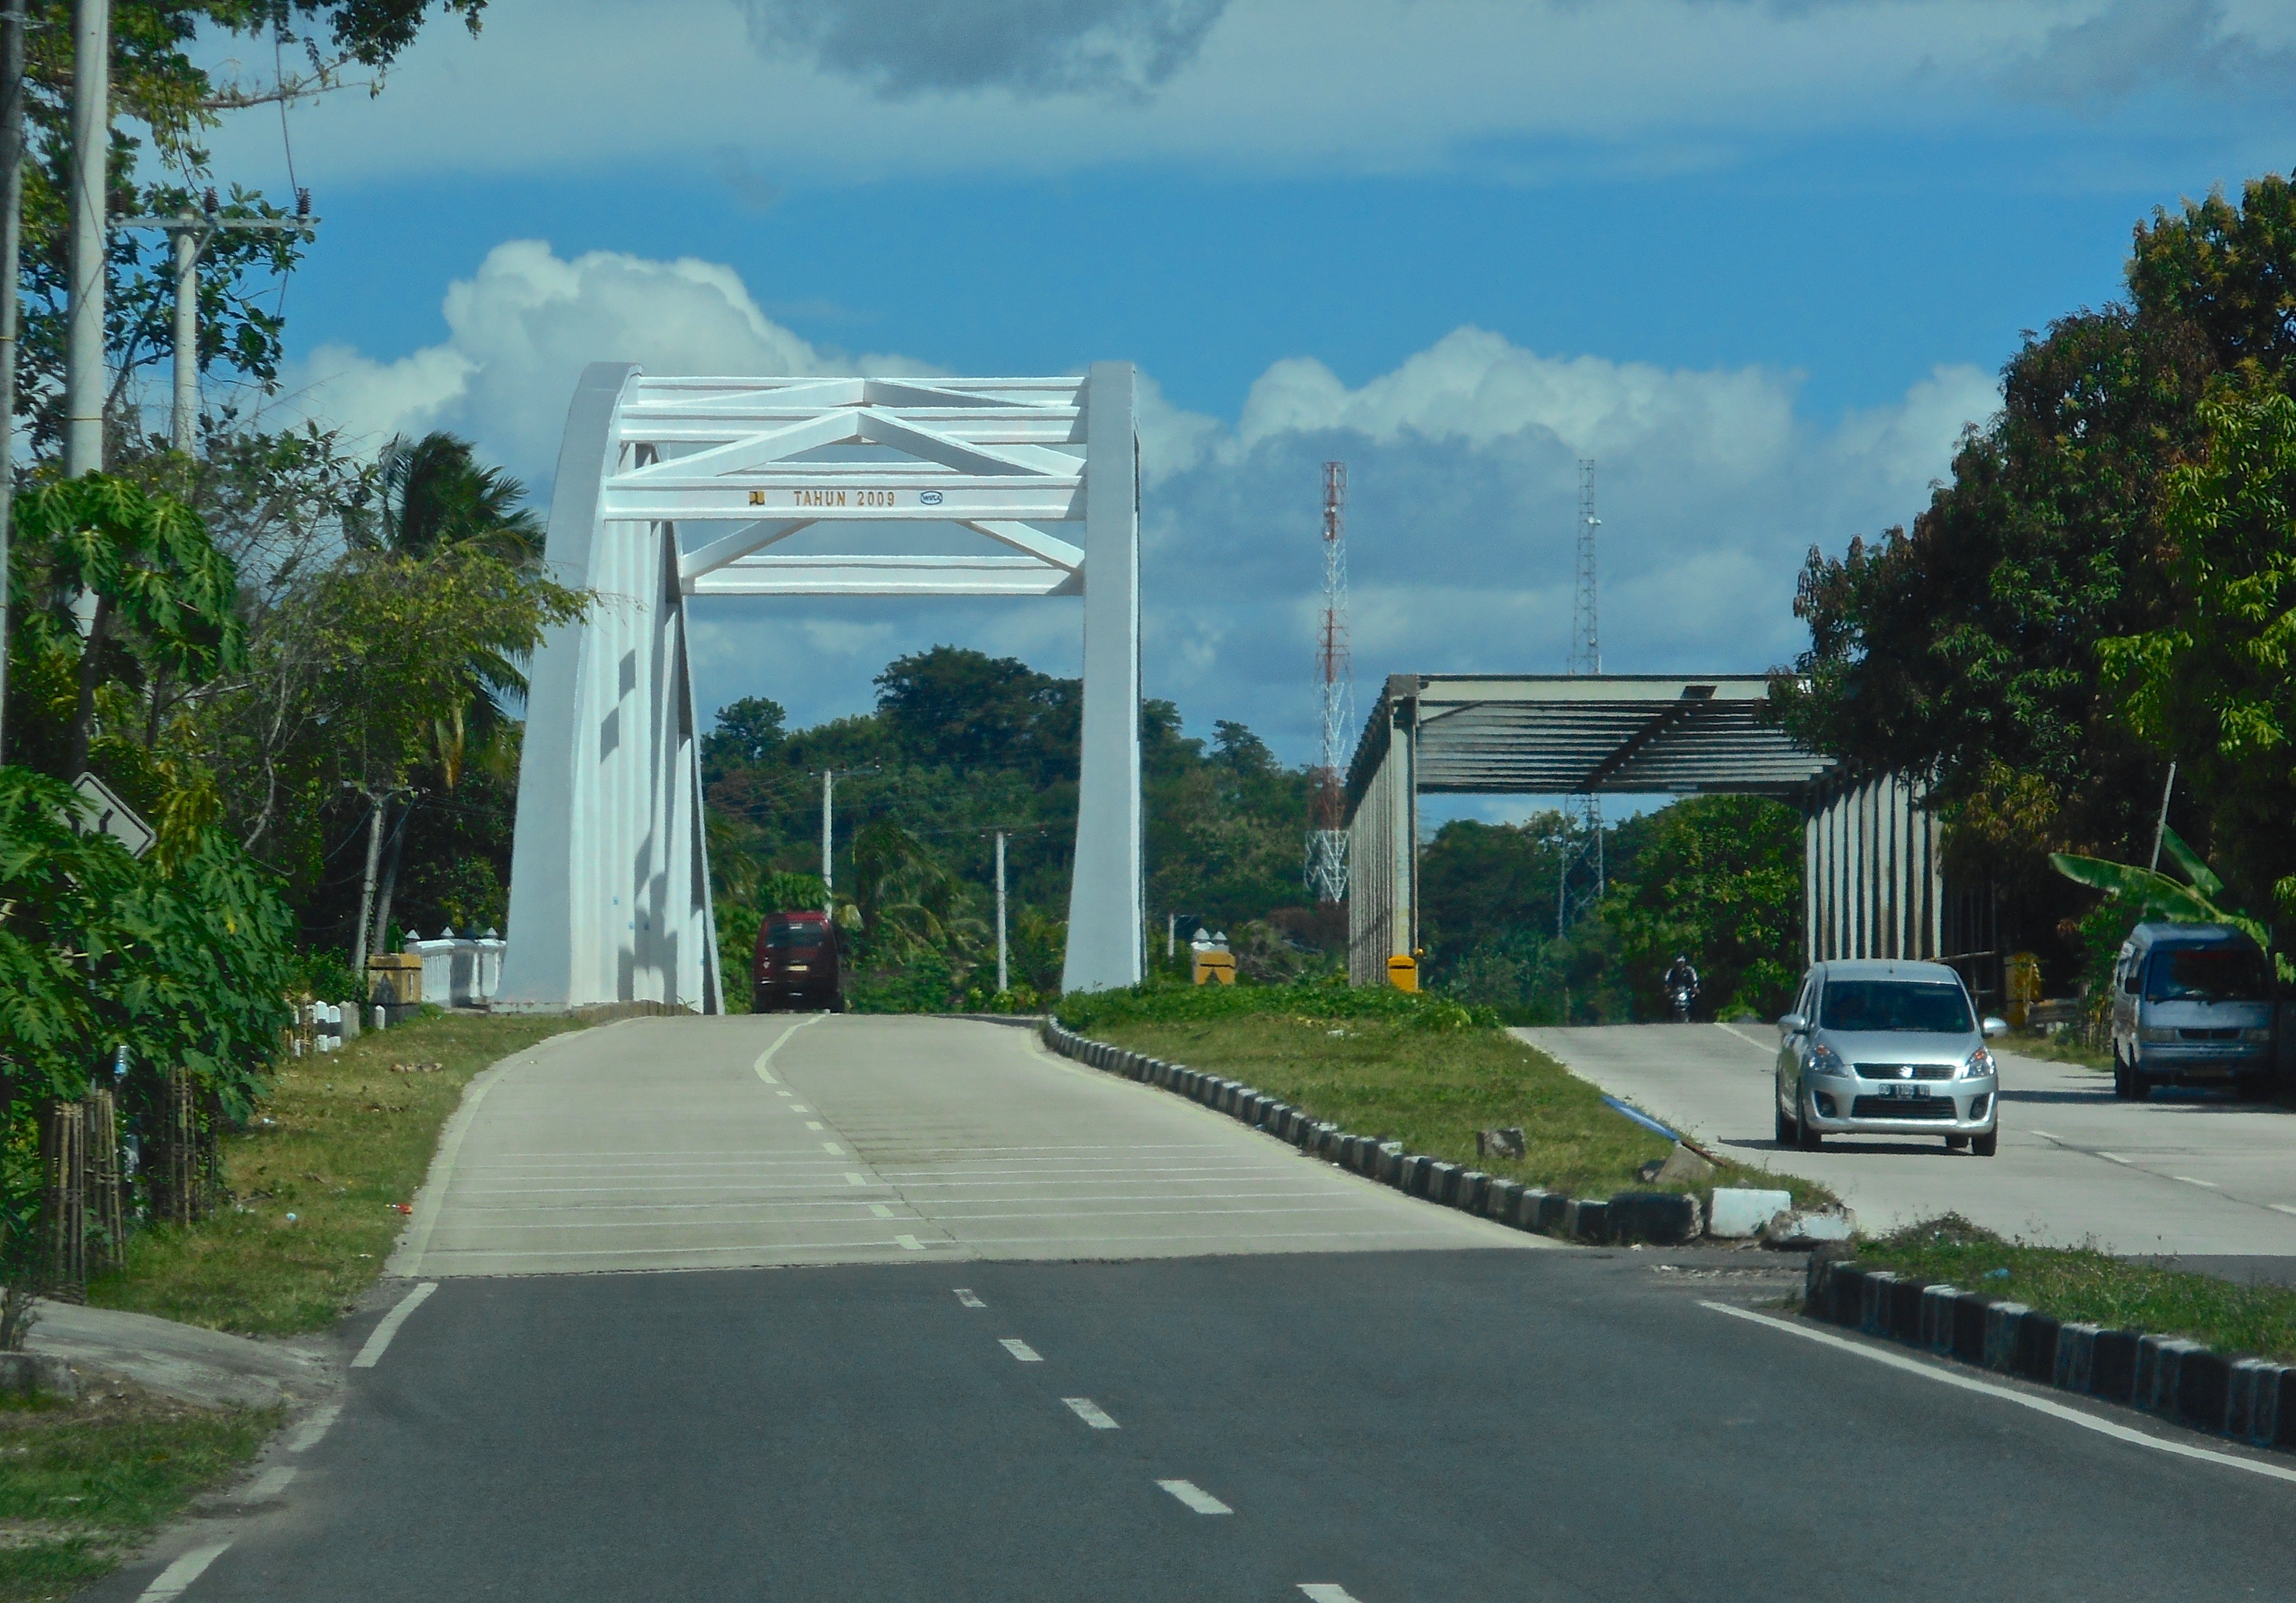 Indonesia Steel Bridges Project (image: Robert Cannon)